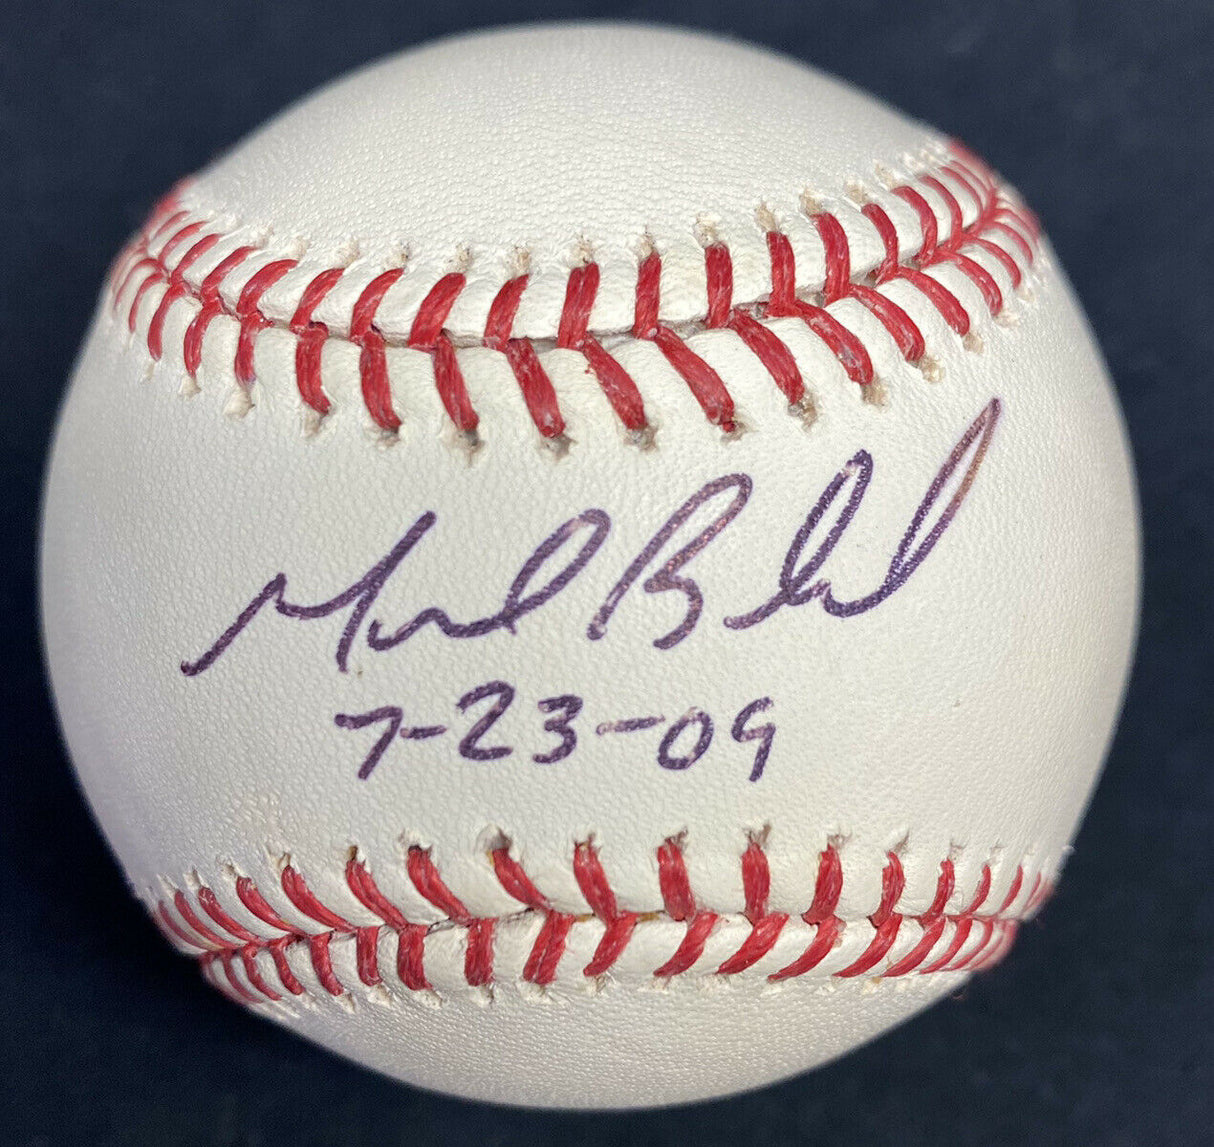 Mark Buehrle PG 7-23-09 Signed Baseball Perfect Game JSA LOA